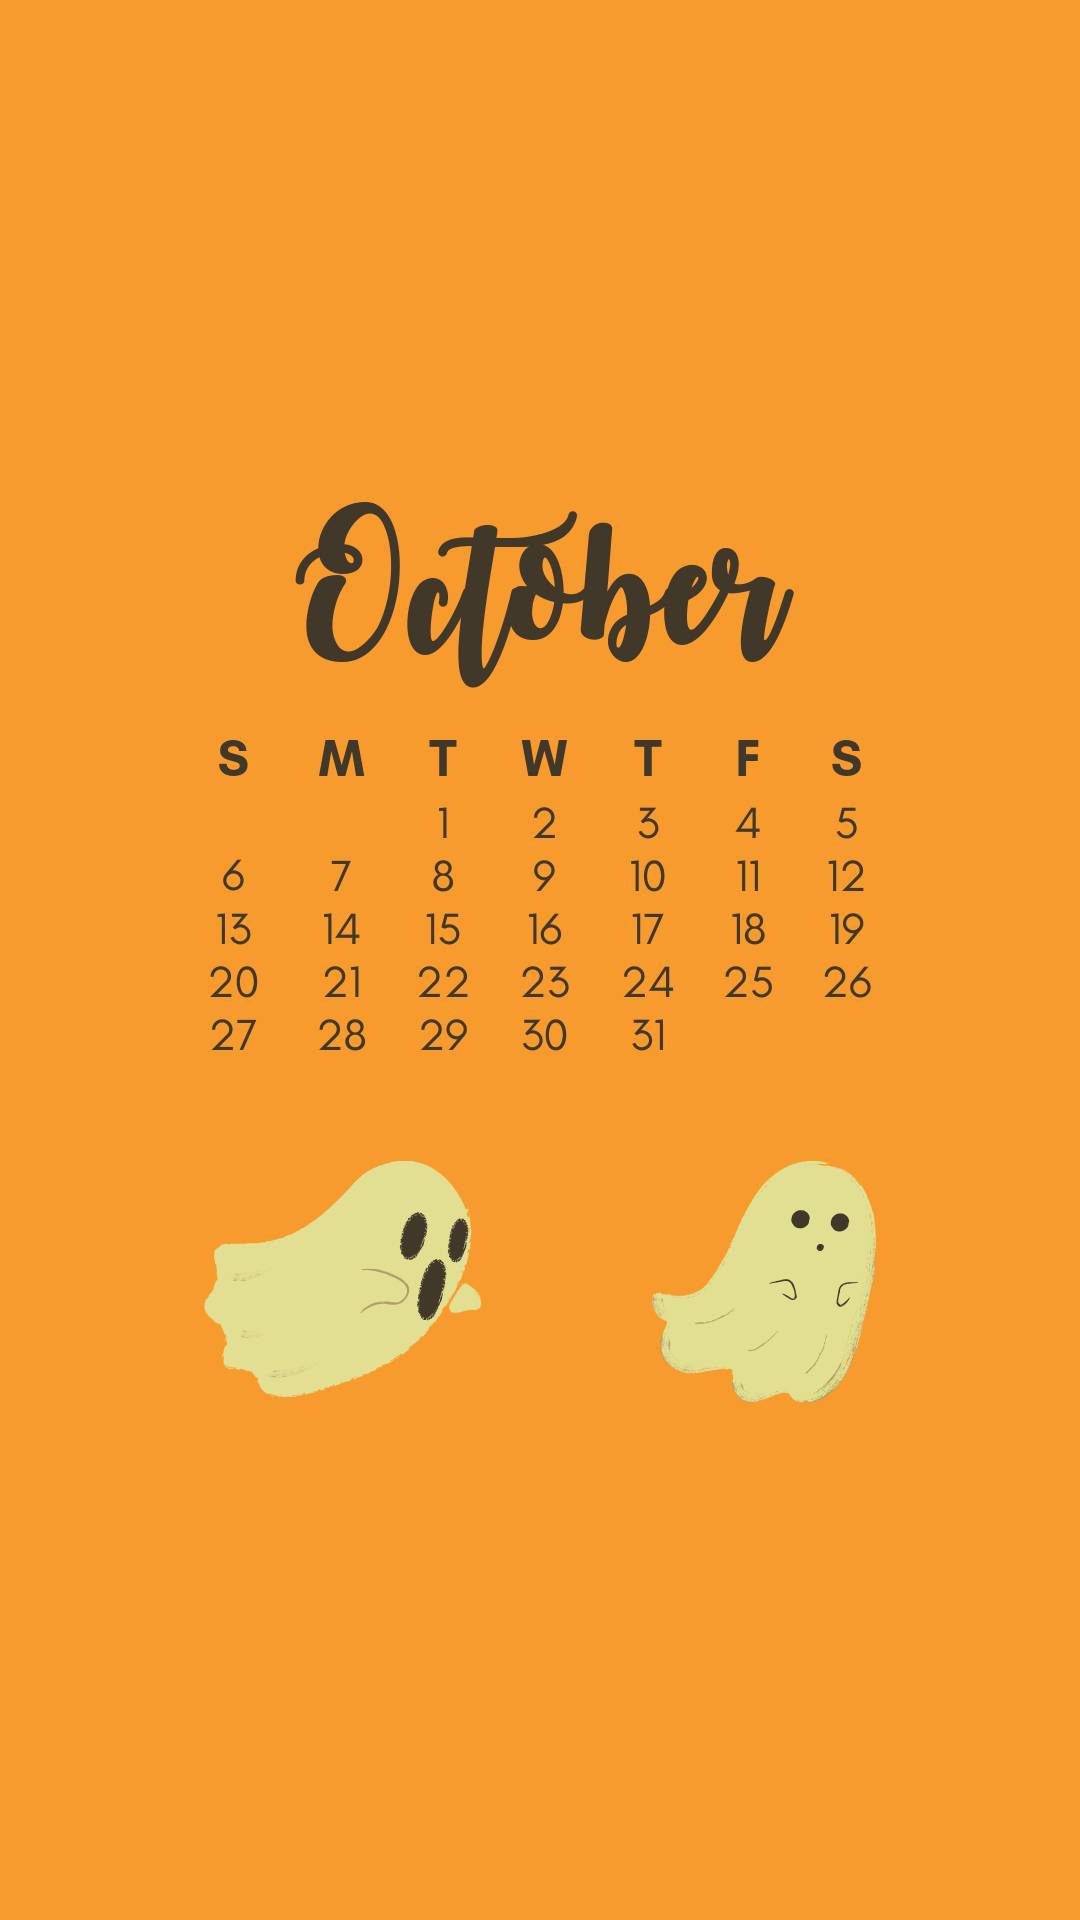 Halloween Phone Background Wallpaper October Calendar